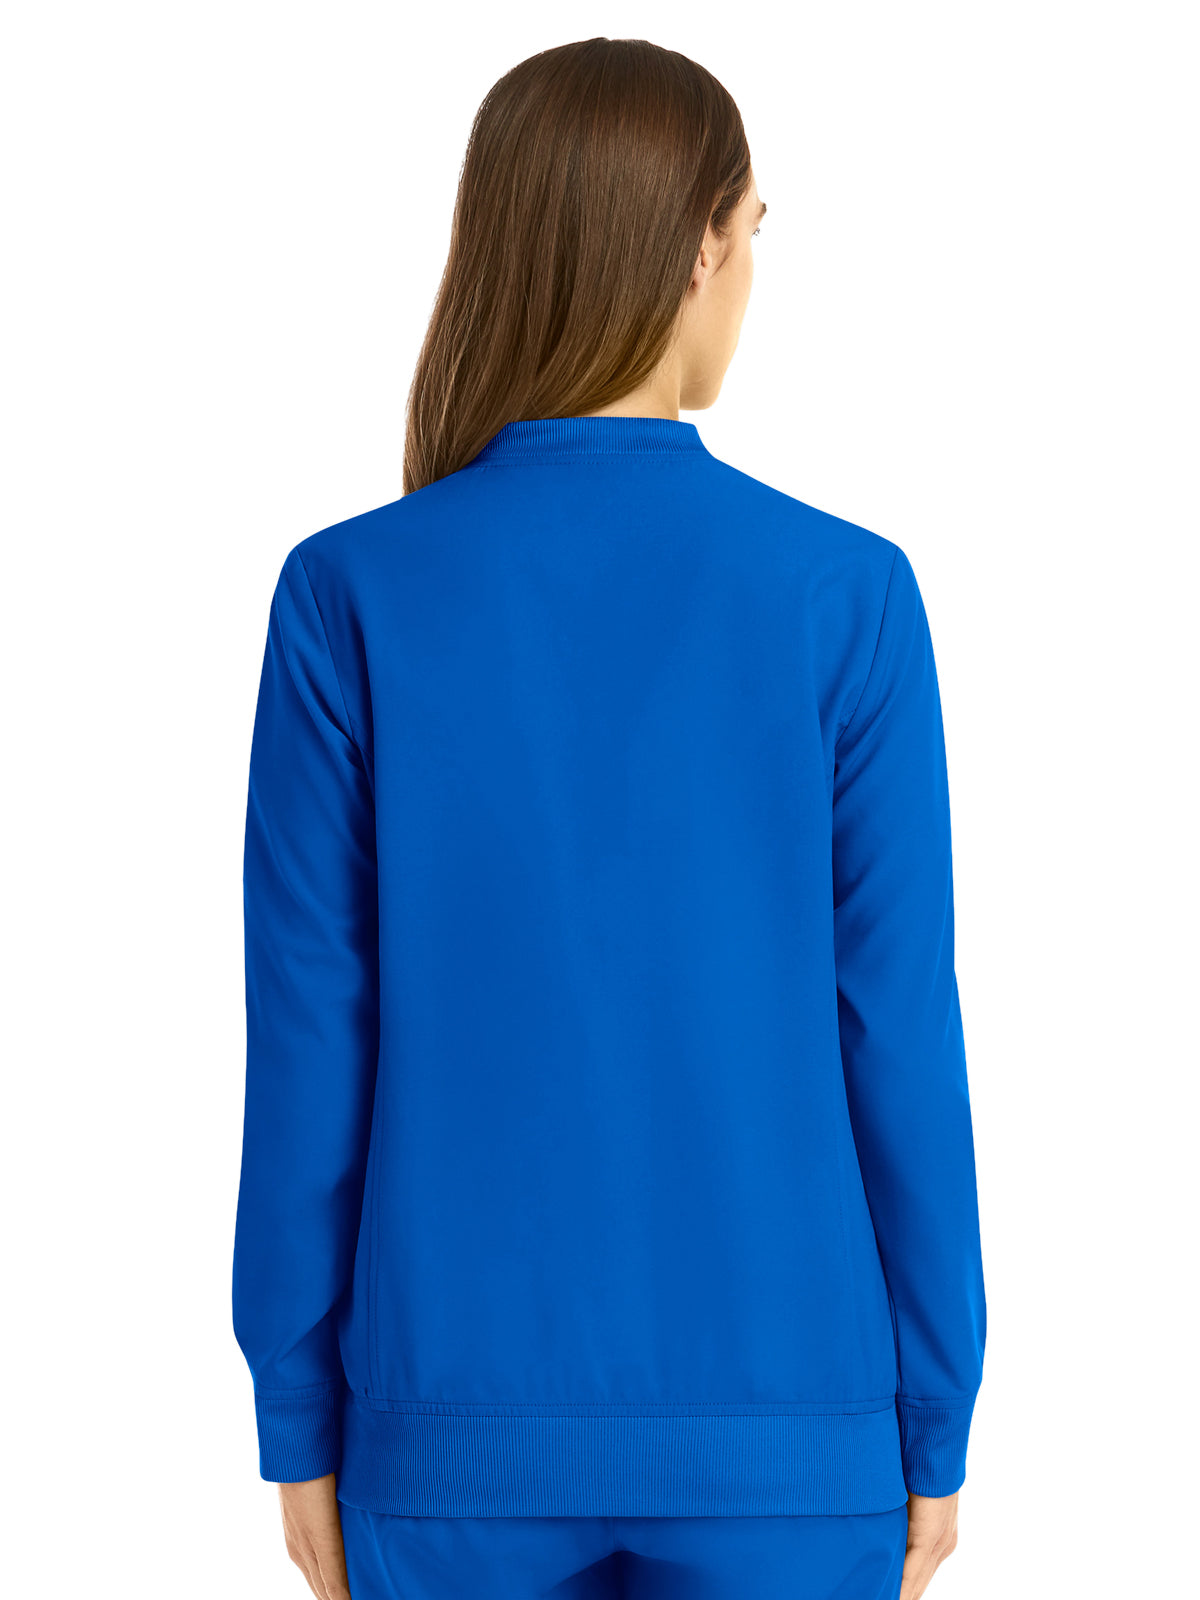 Women's Front Zip Jacket - 5061 - Royal Blue